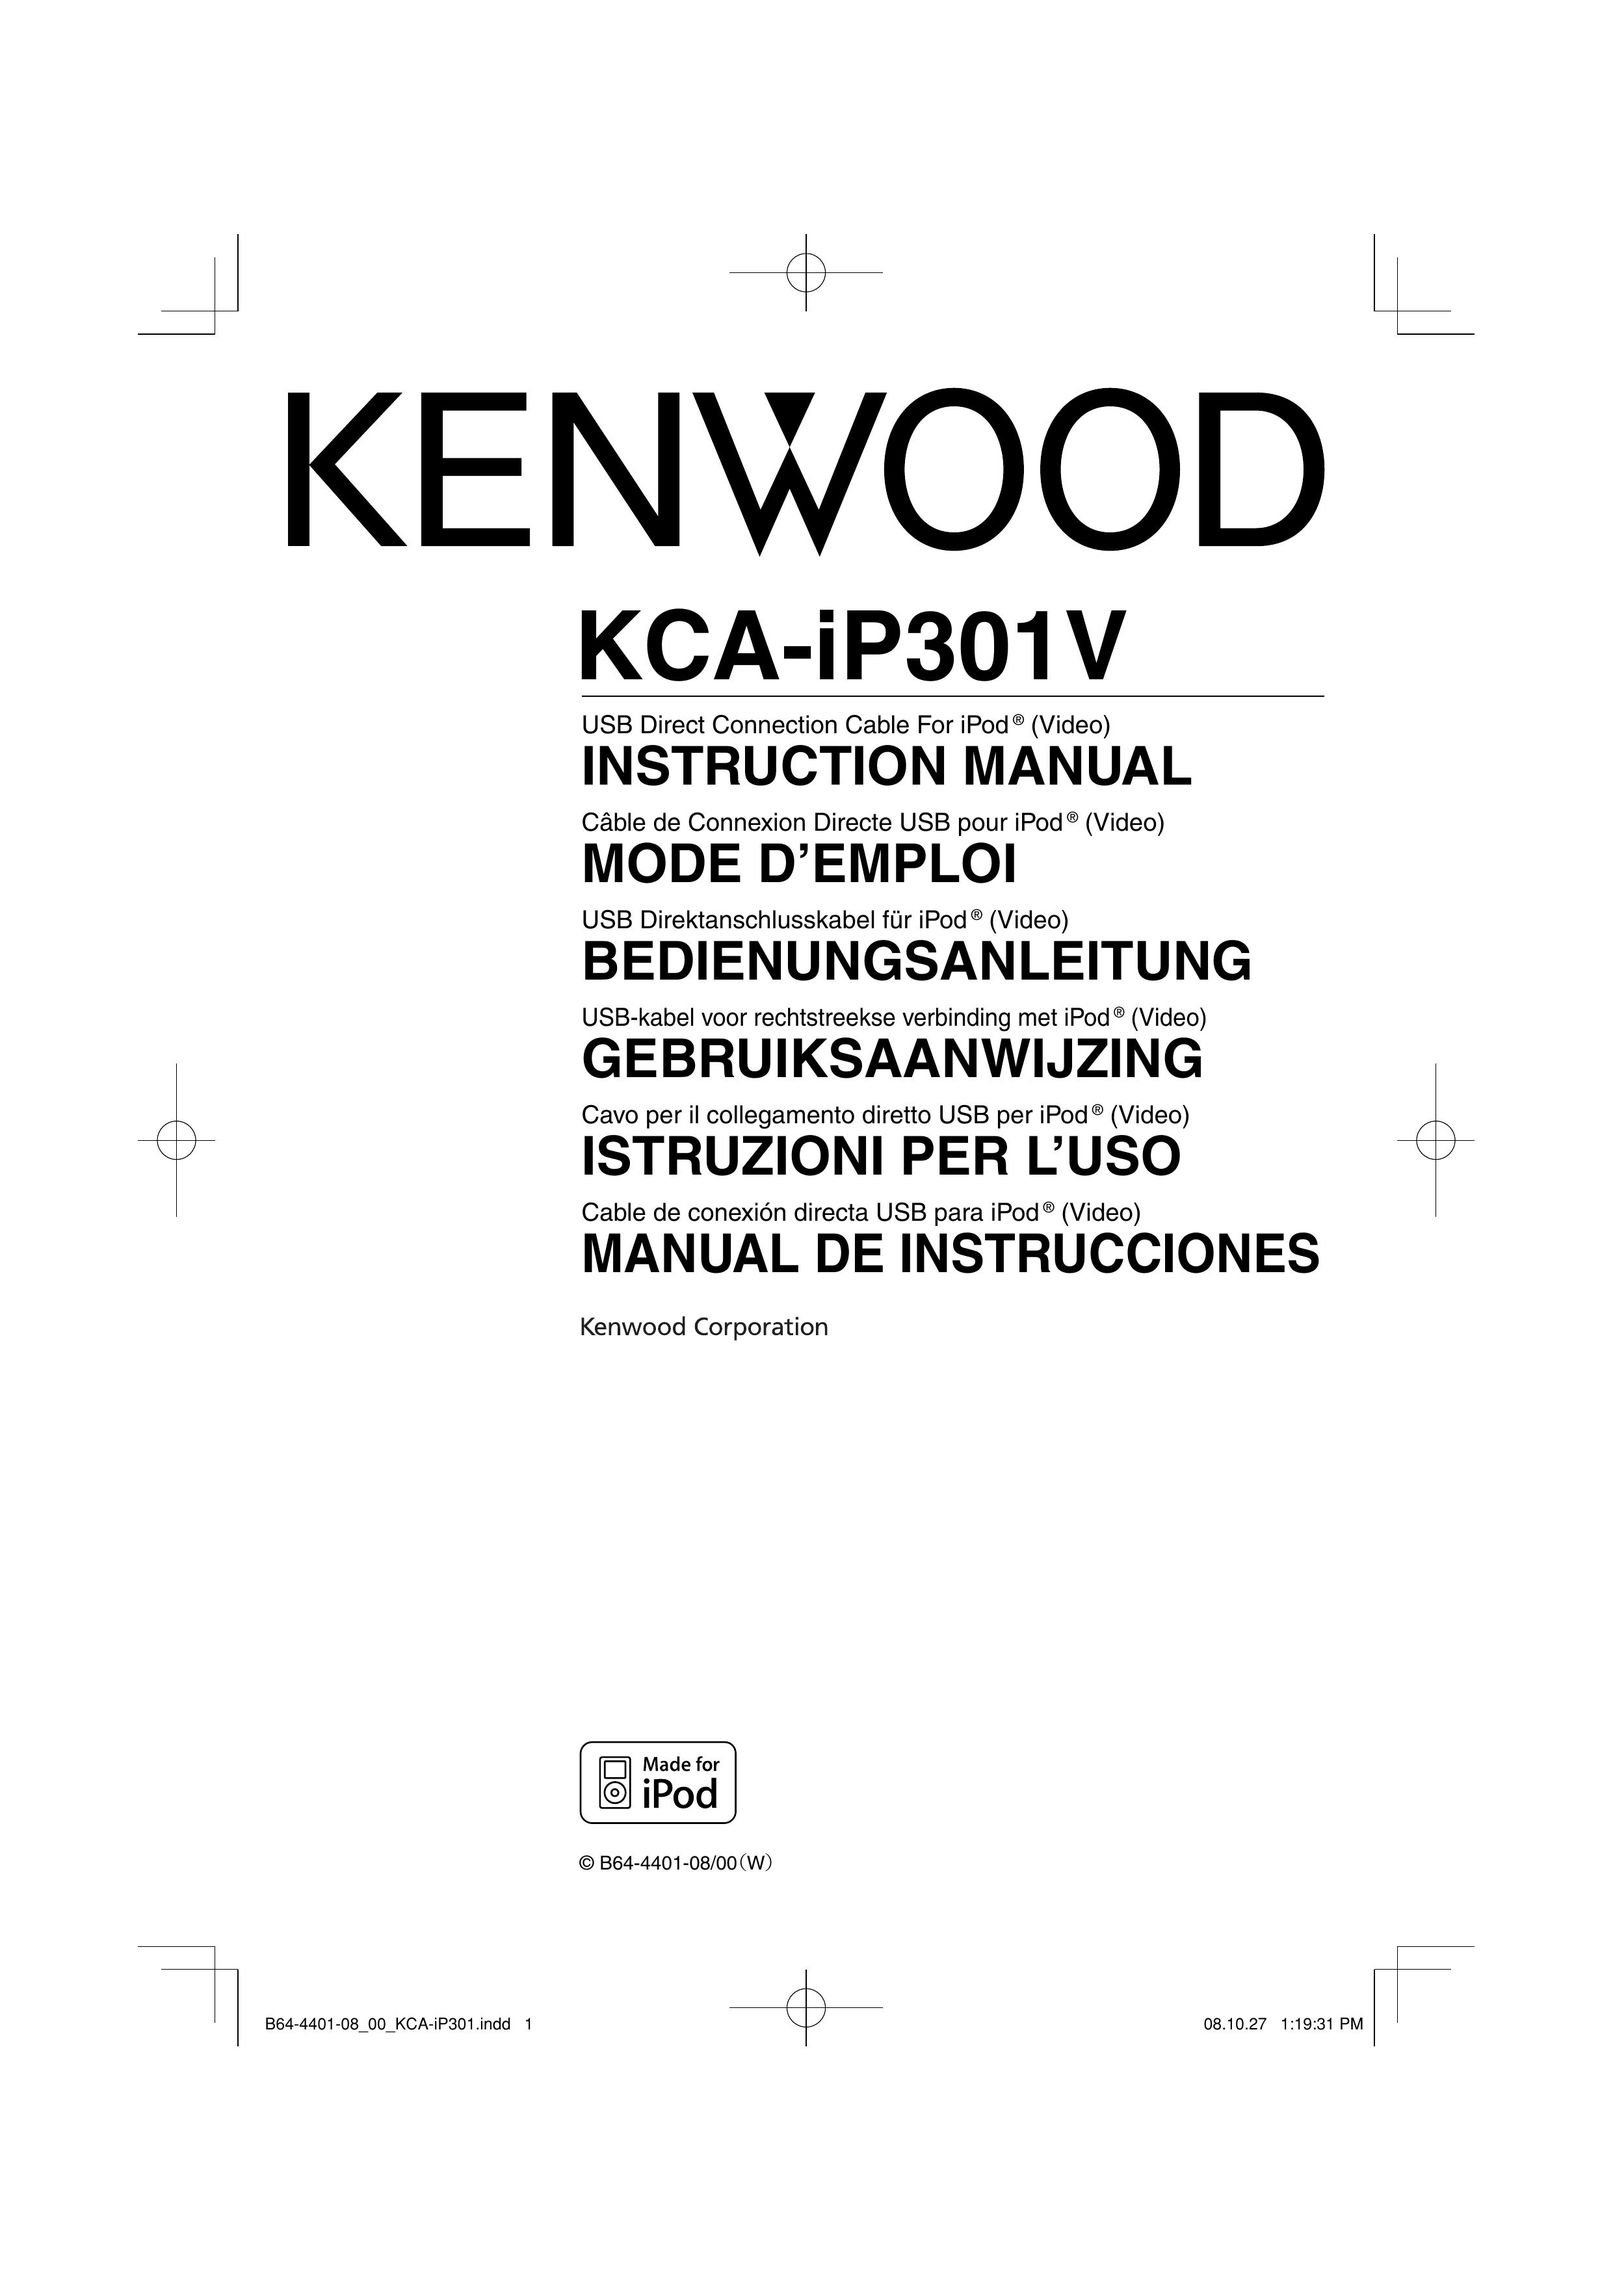 Kenwood KCA-iP301V Headphones User Manual